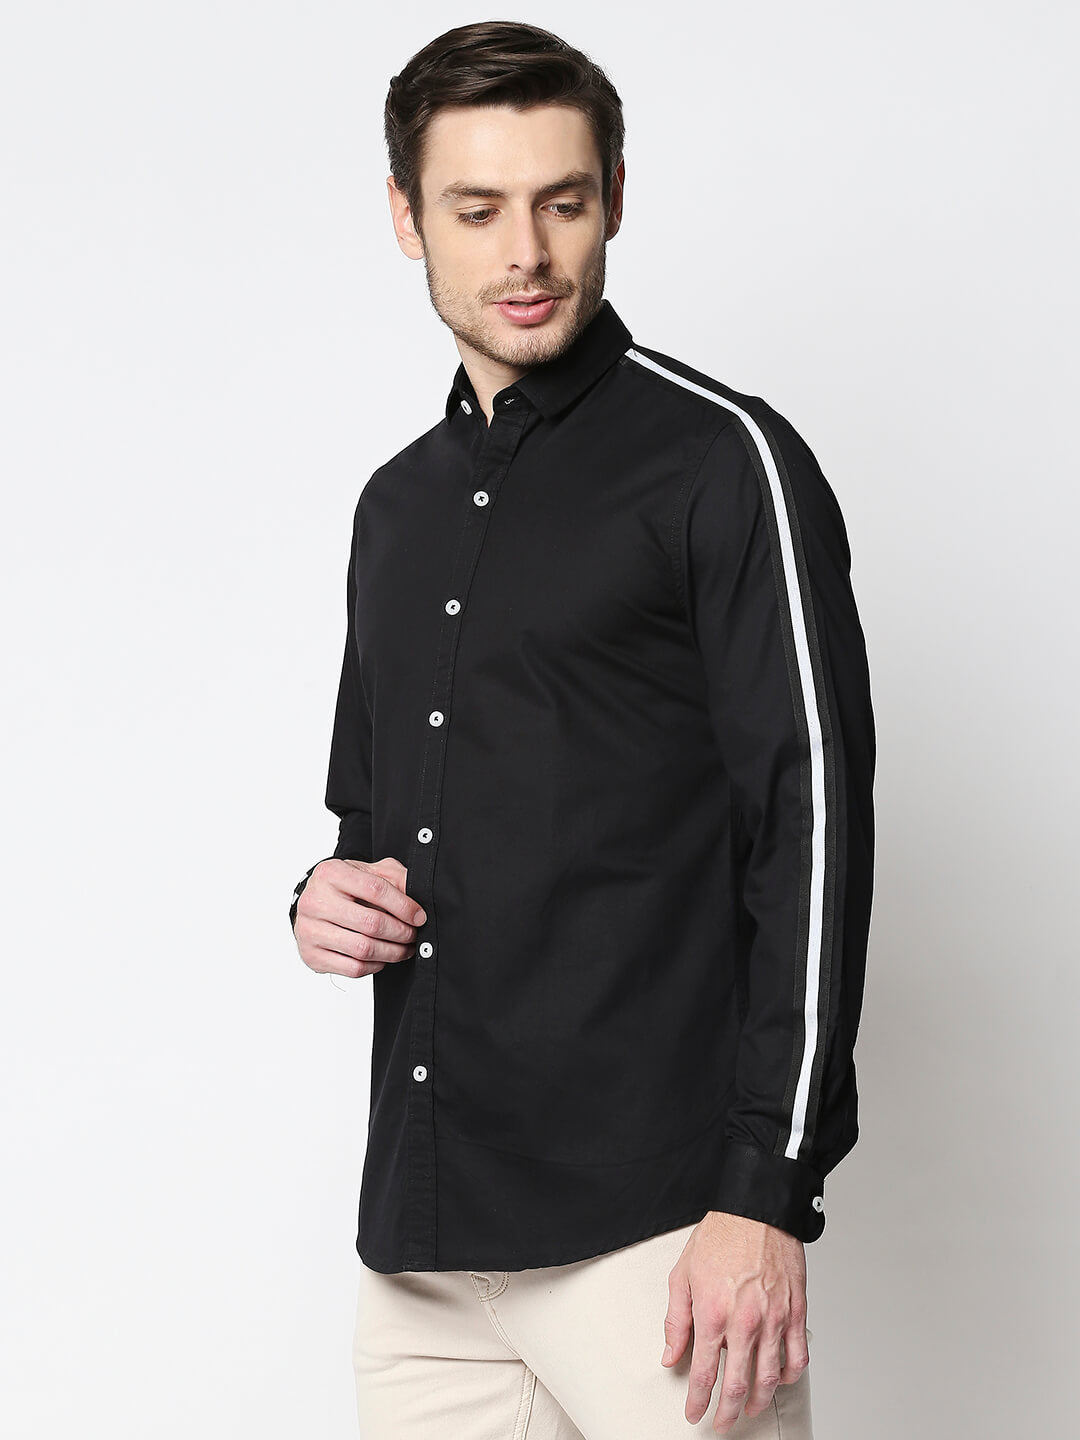 The Manaca Men Partywear Shirt- Black & White Stripe